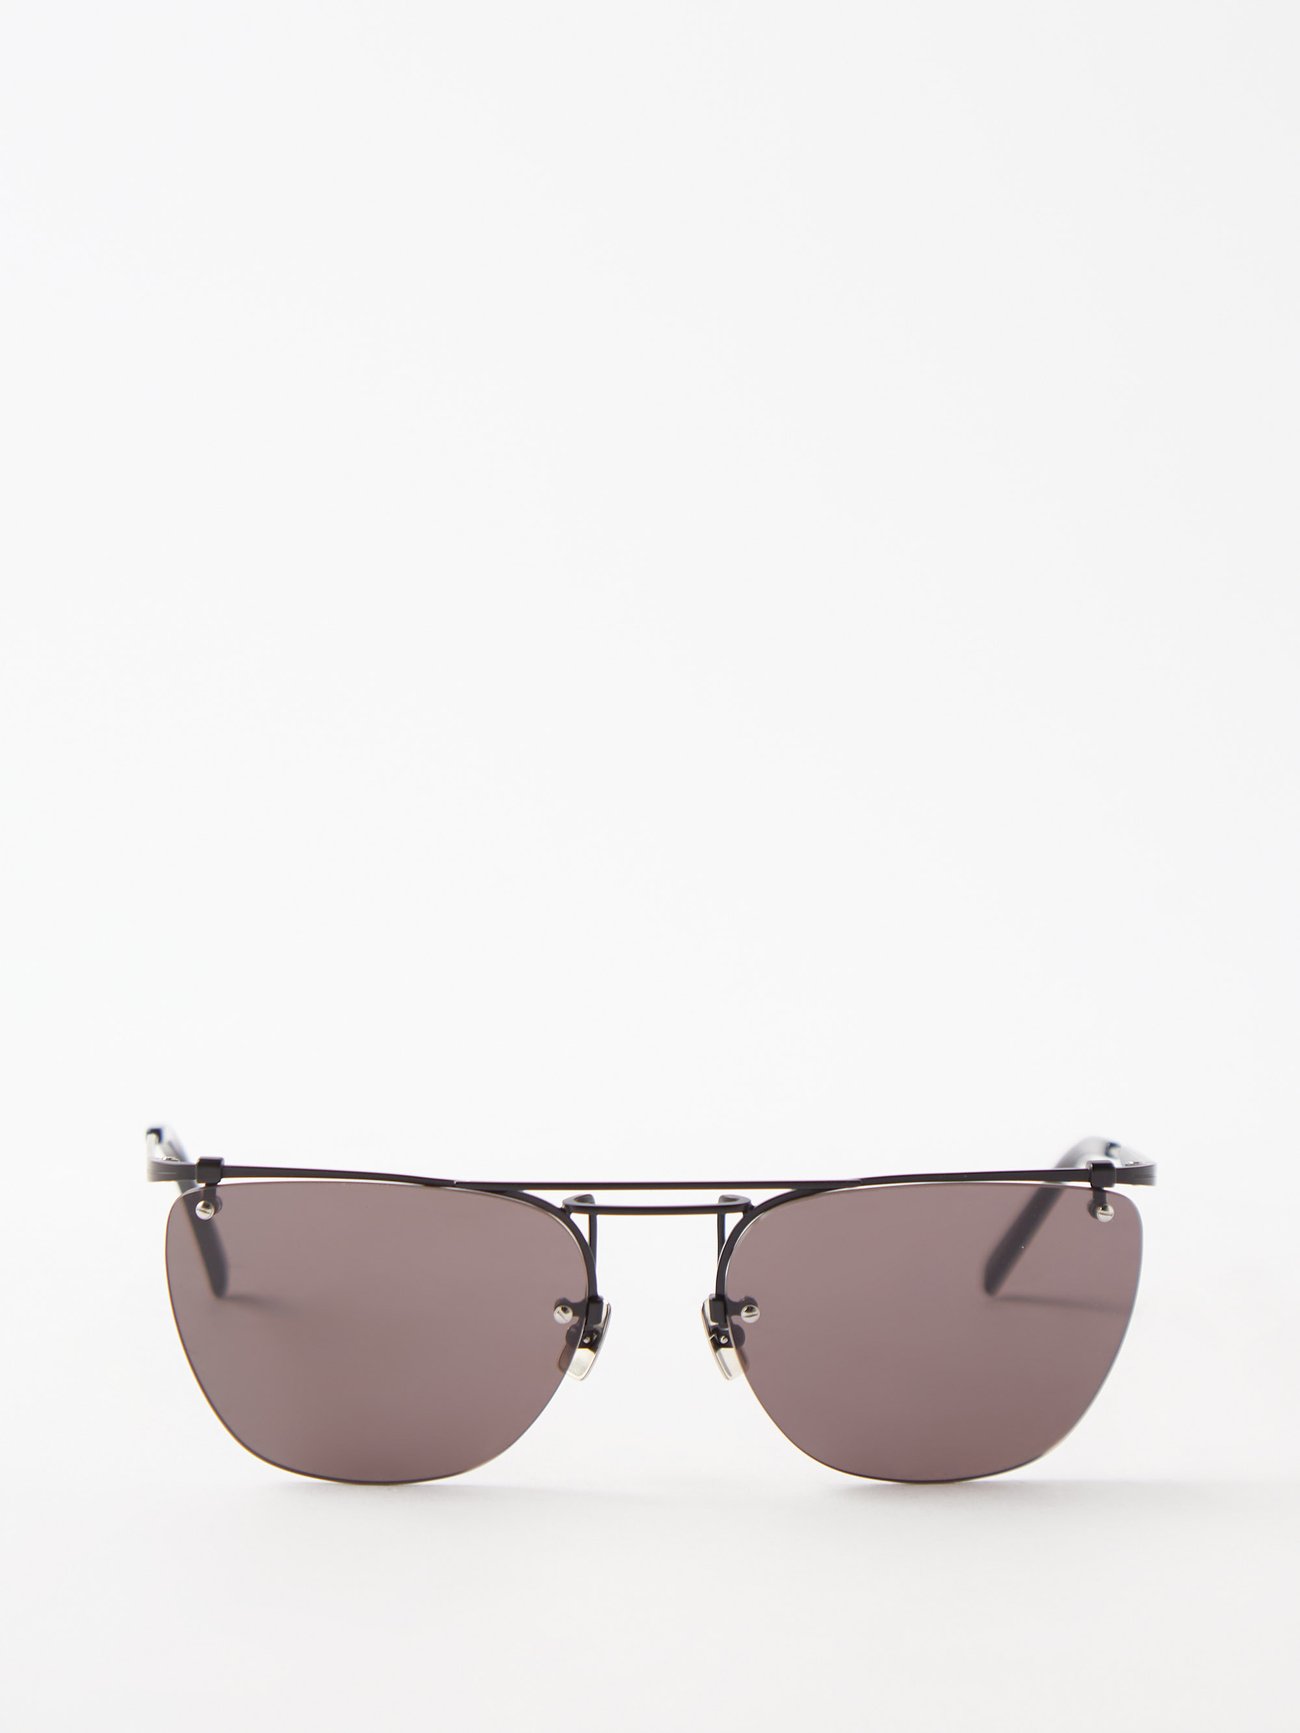 Saint Laurent Black SL 600 Sunglasses